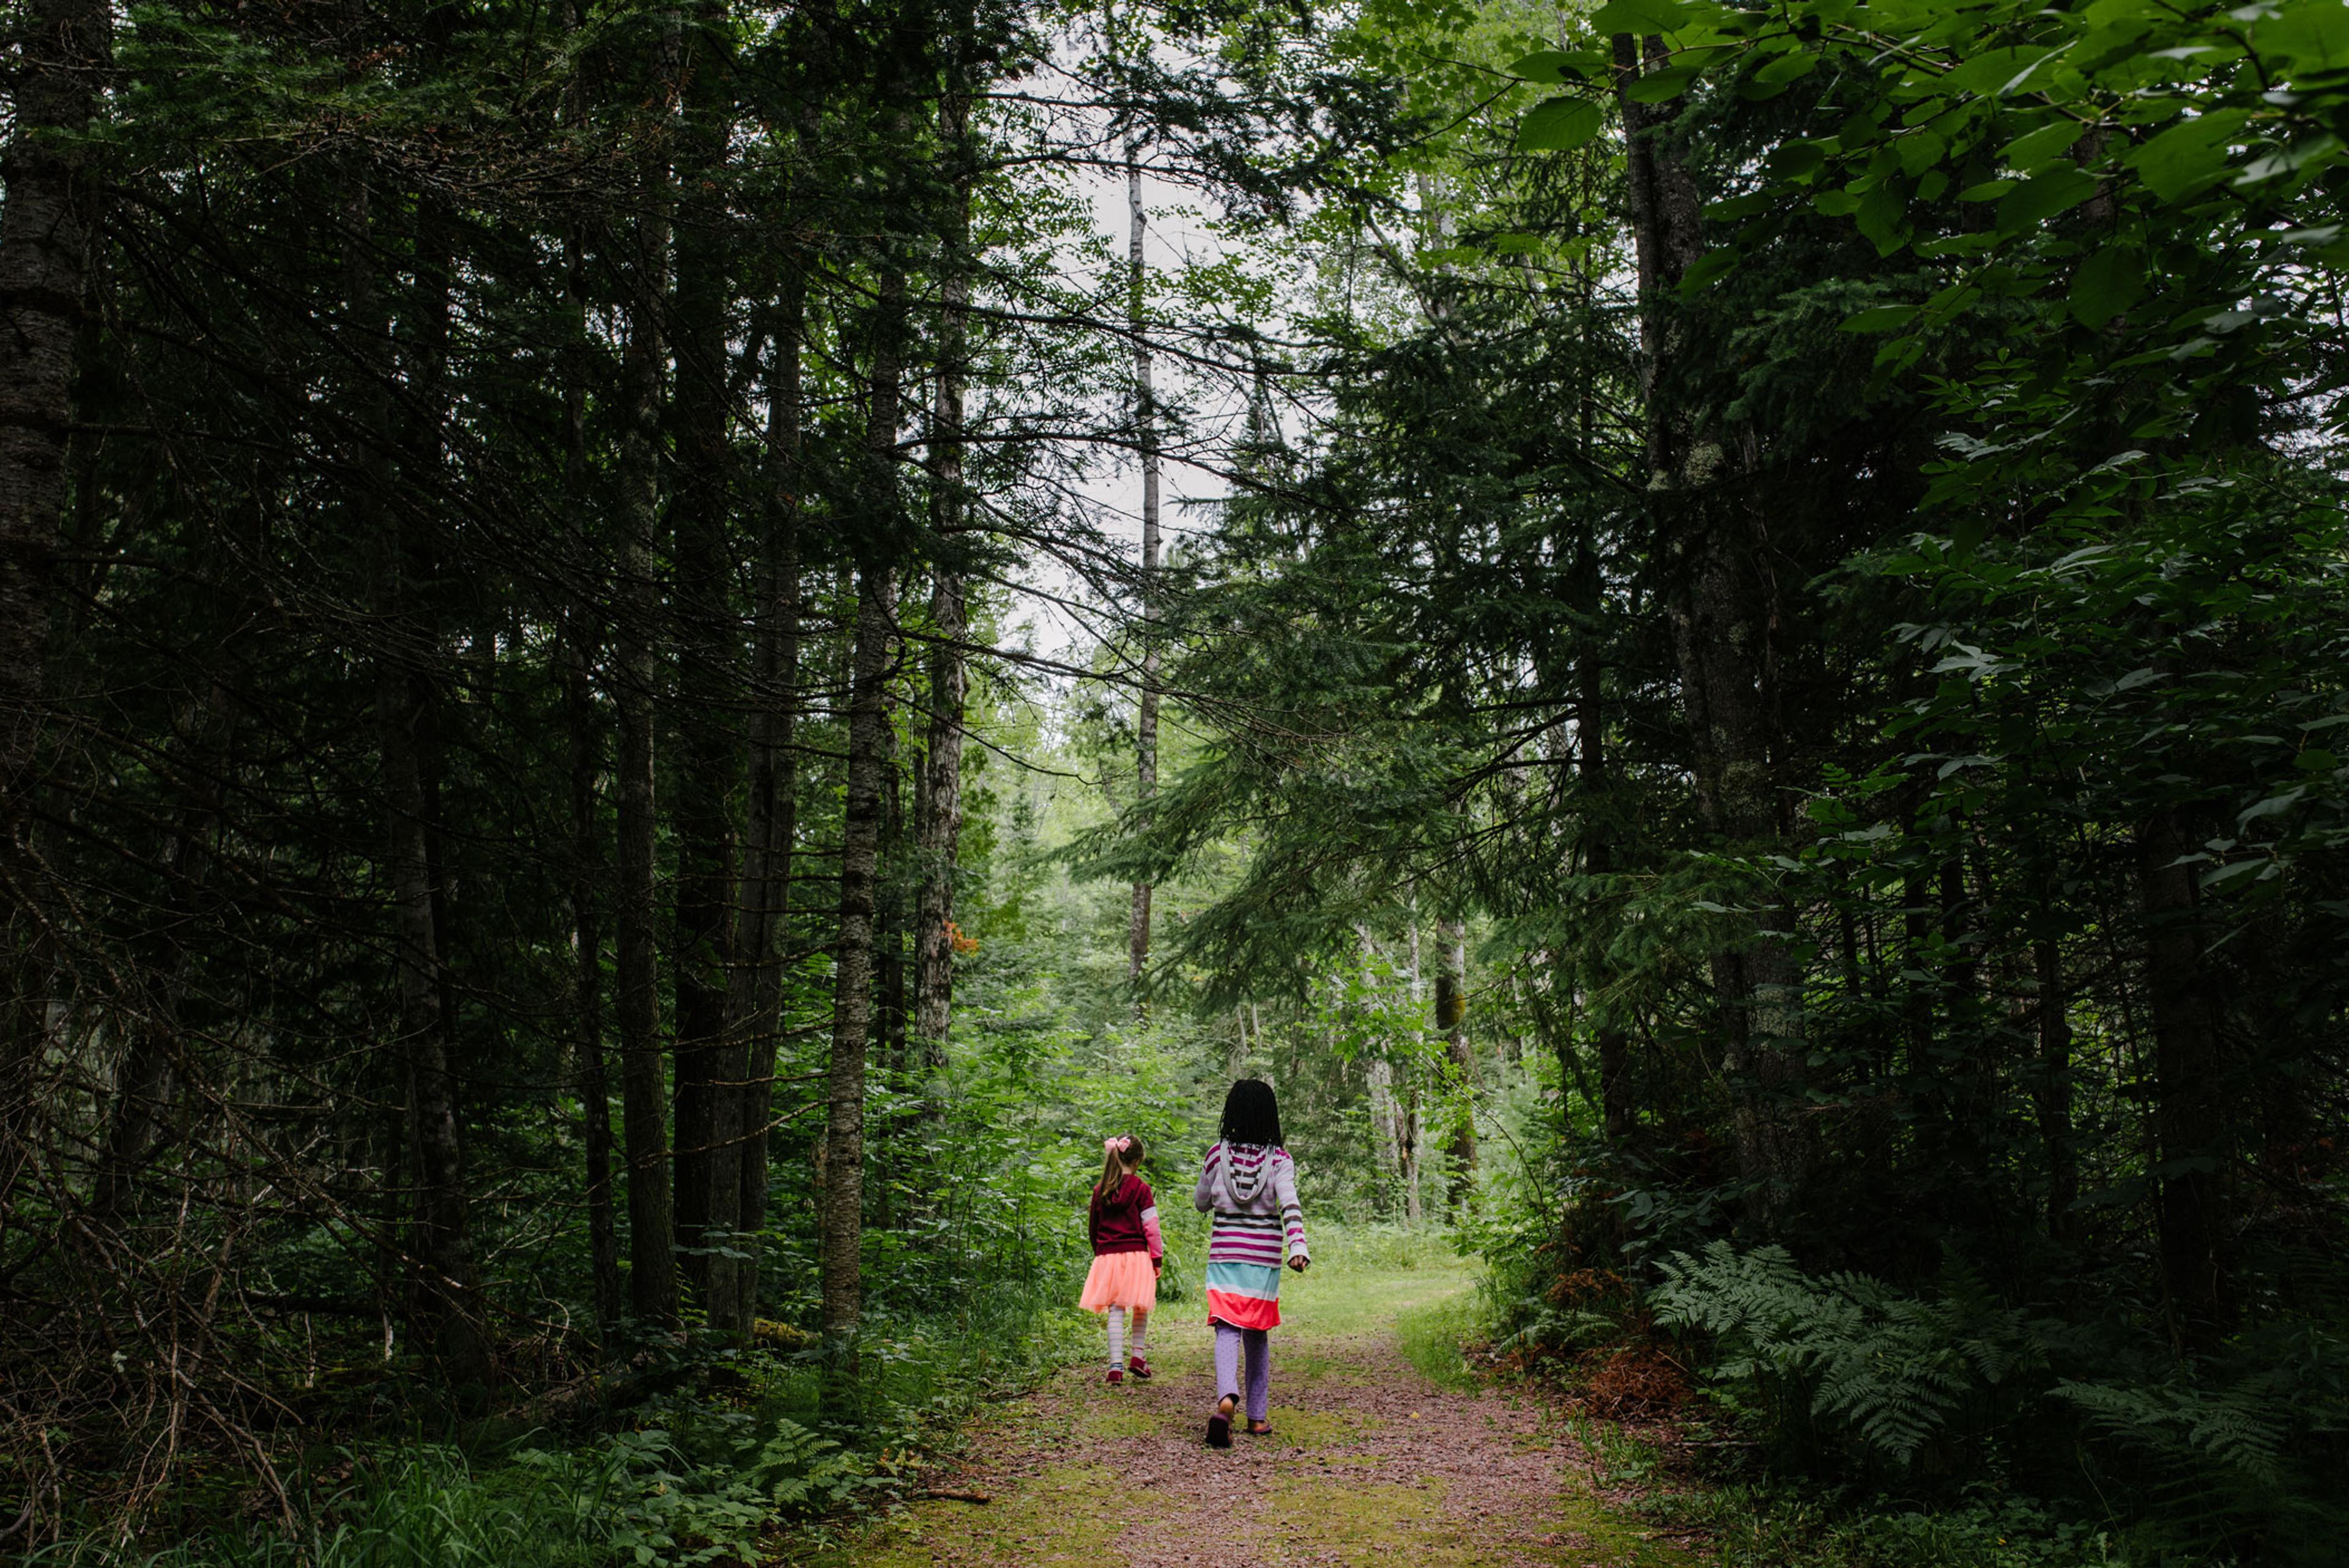 Two children walking through a forest